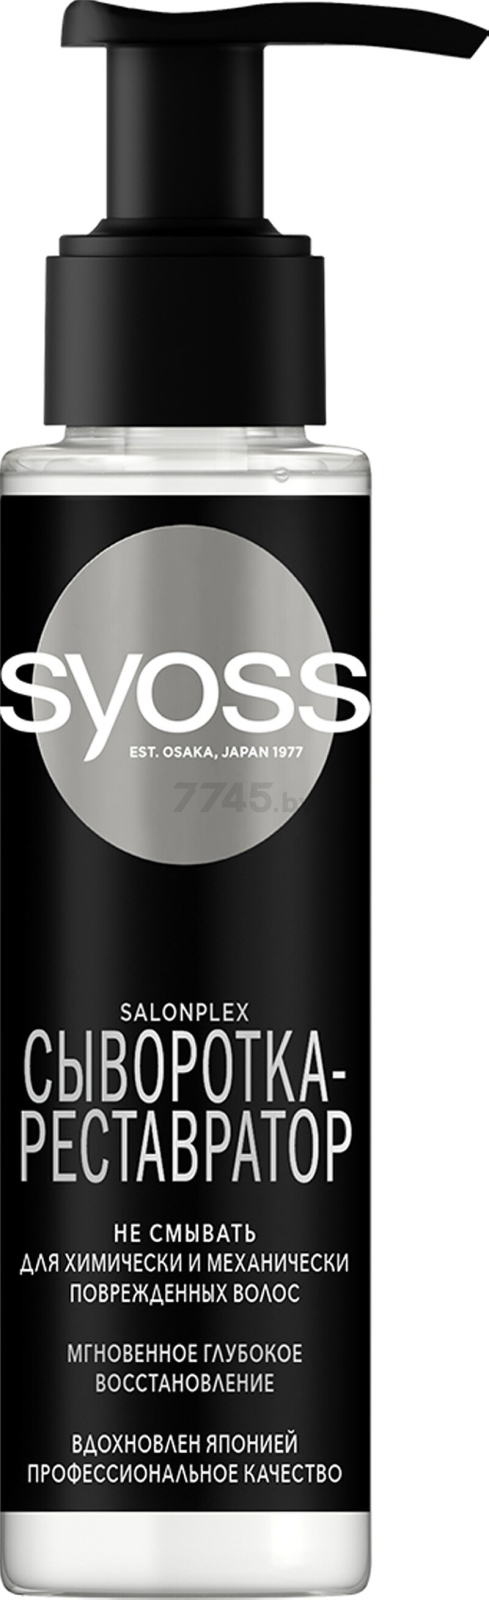 Сыворотка SYOSS Salonplex 100 мл (4015100193466) - Фото 3